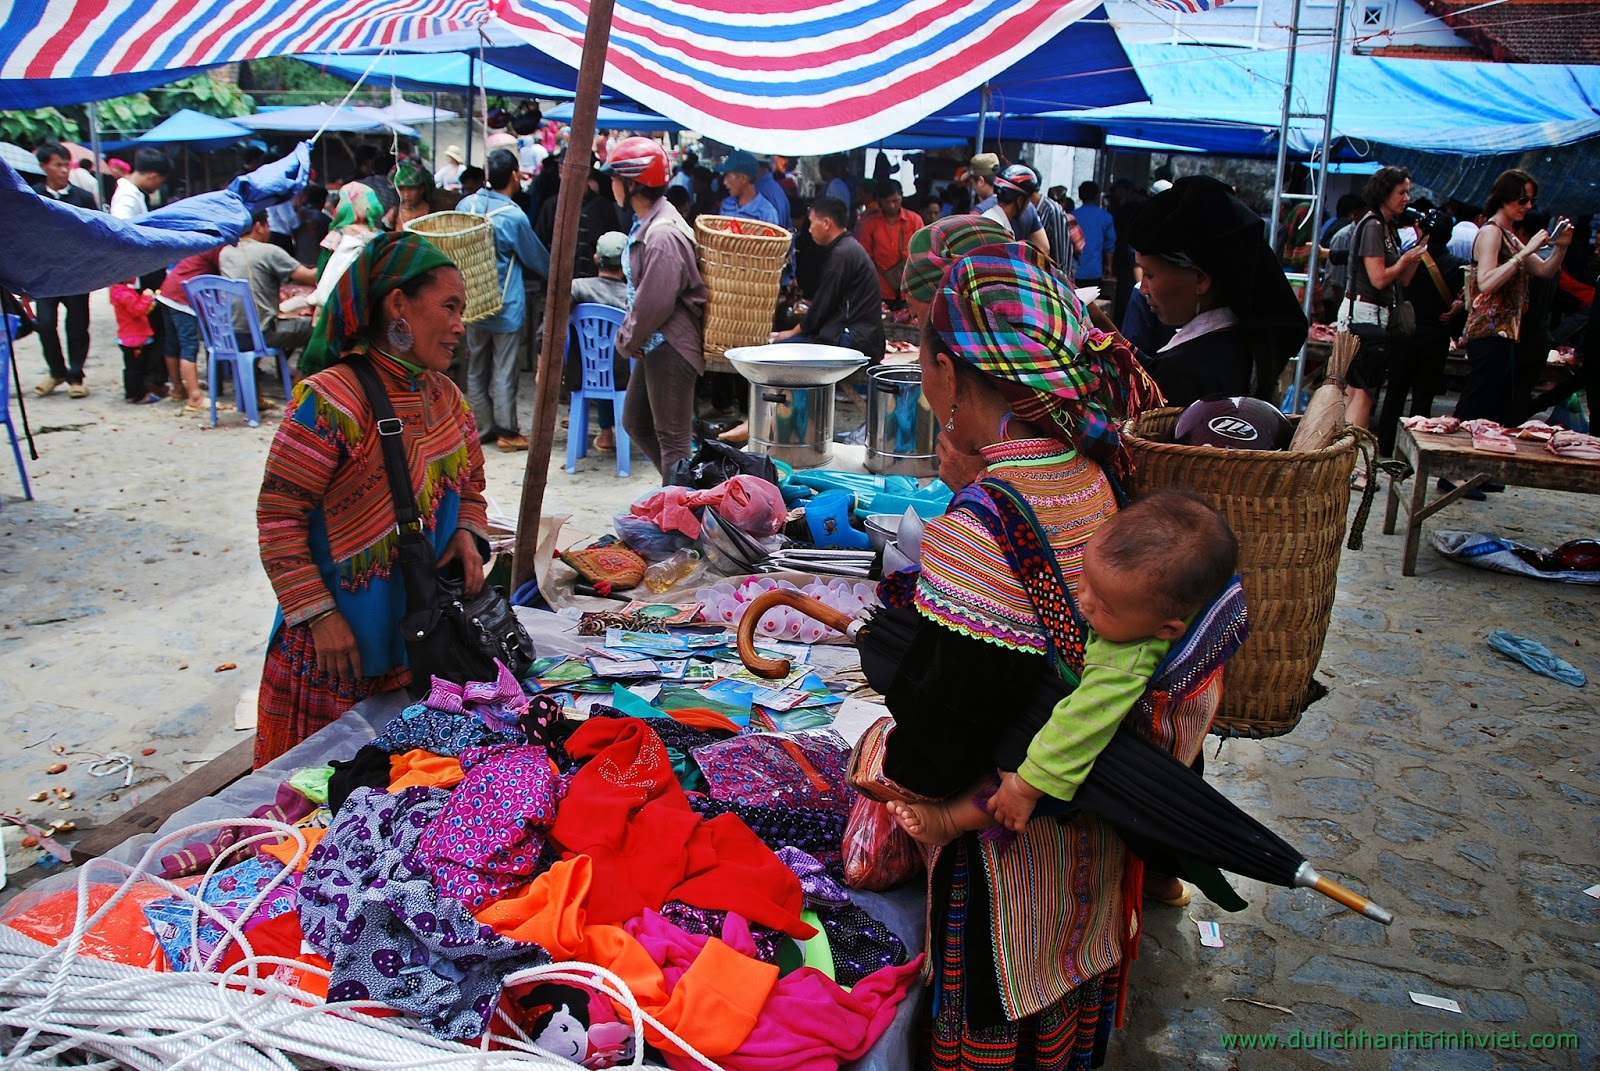 Balade au marché hebdomadaire Bac Ha - province de Lao Cai